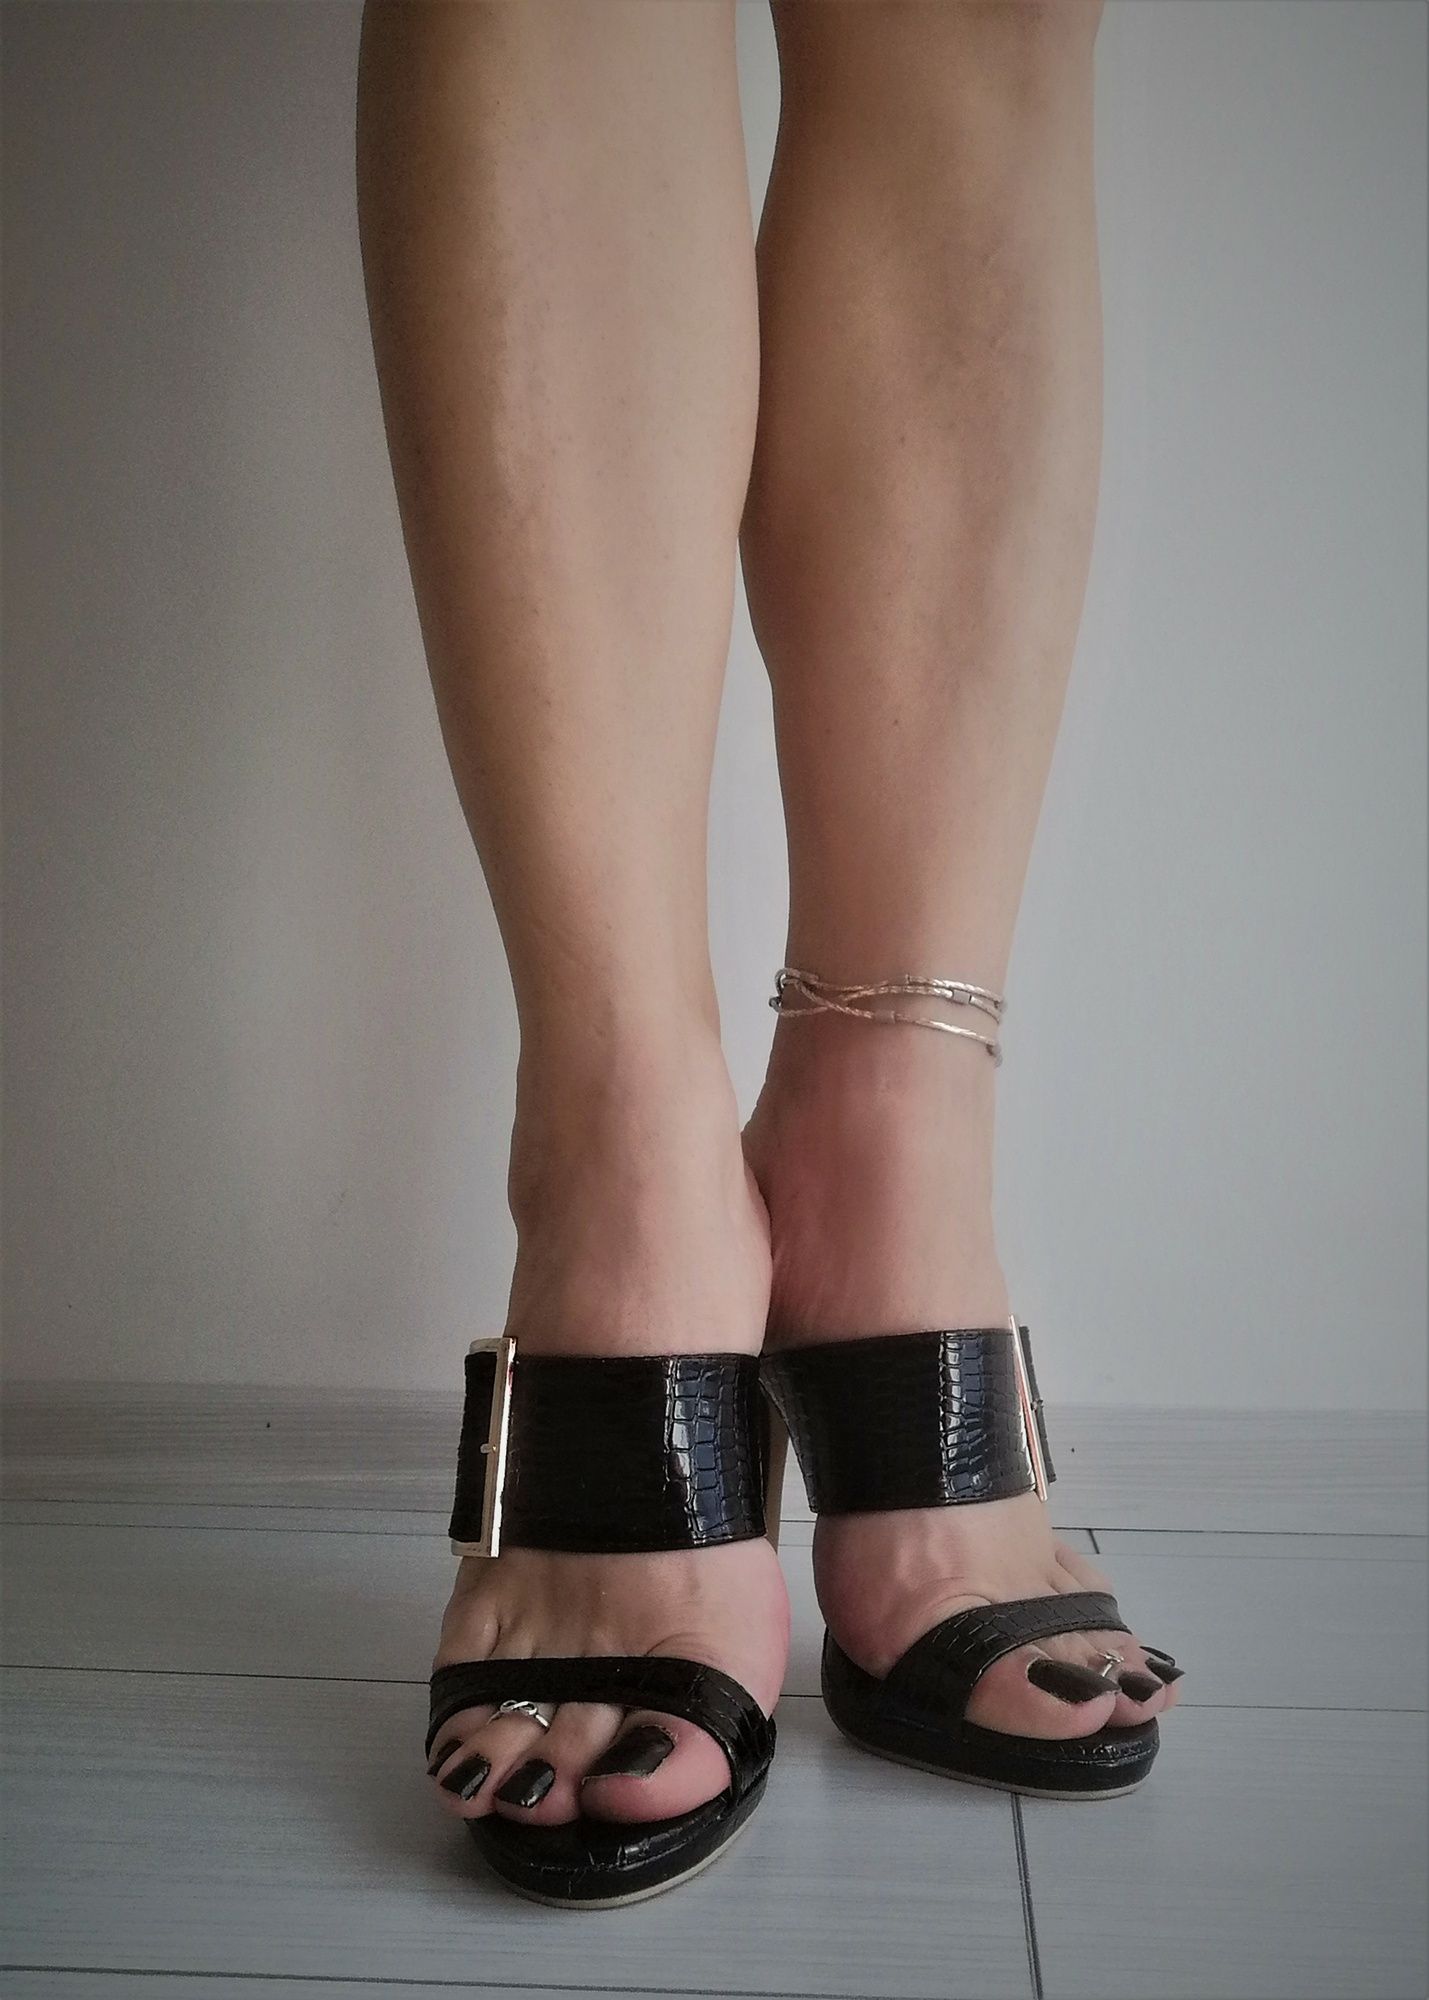 Black Sandal Heels & Sexy Feet #34